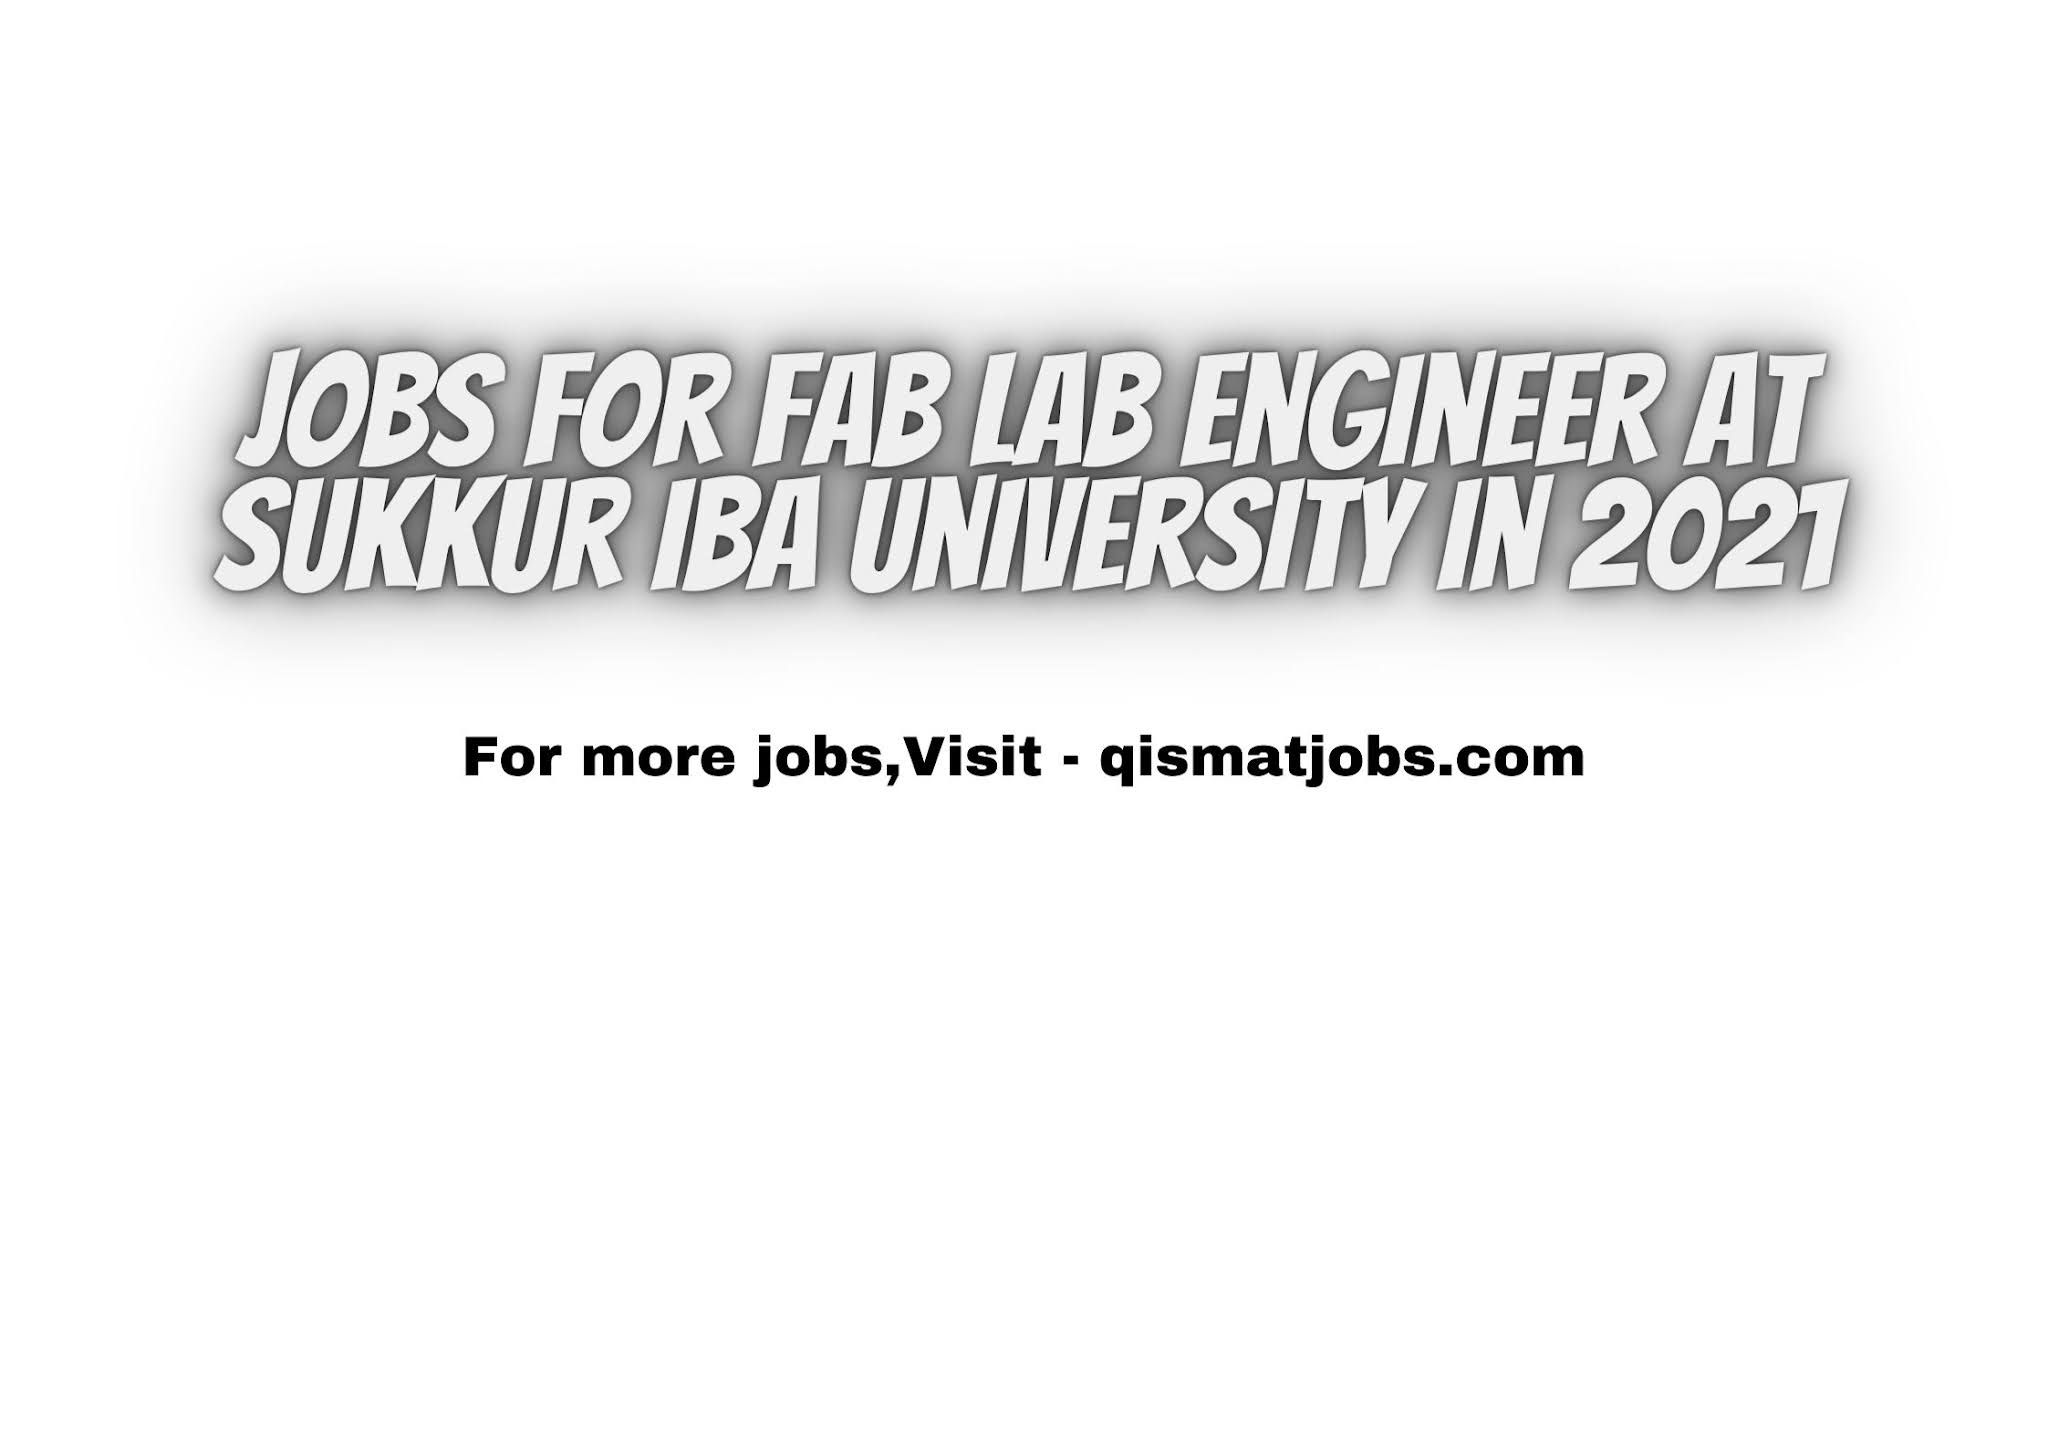 FAB lab Engineer at Sukkur IBA University Latest Job 2021 | Sukkur, Pakistan